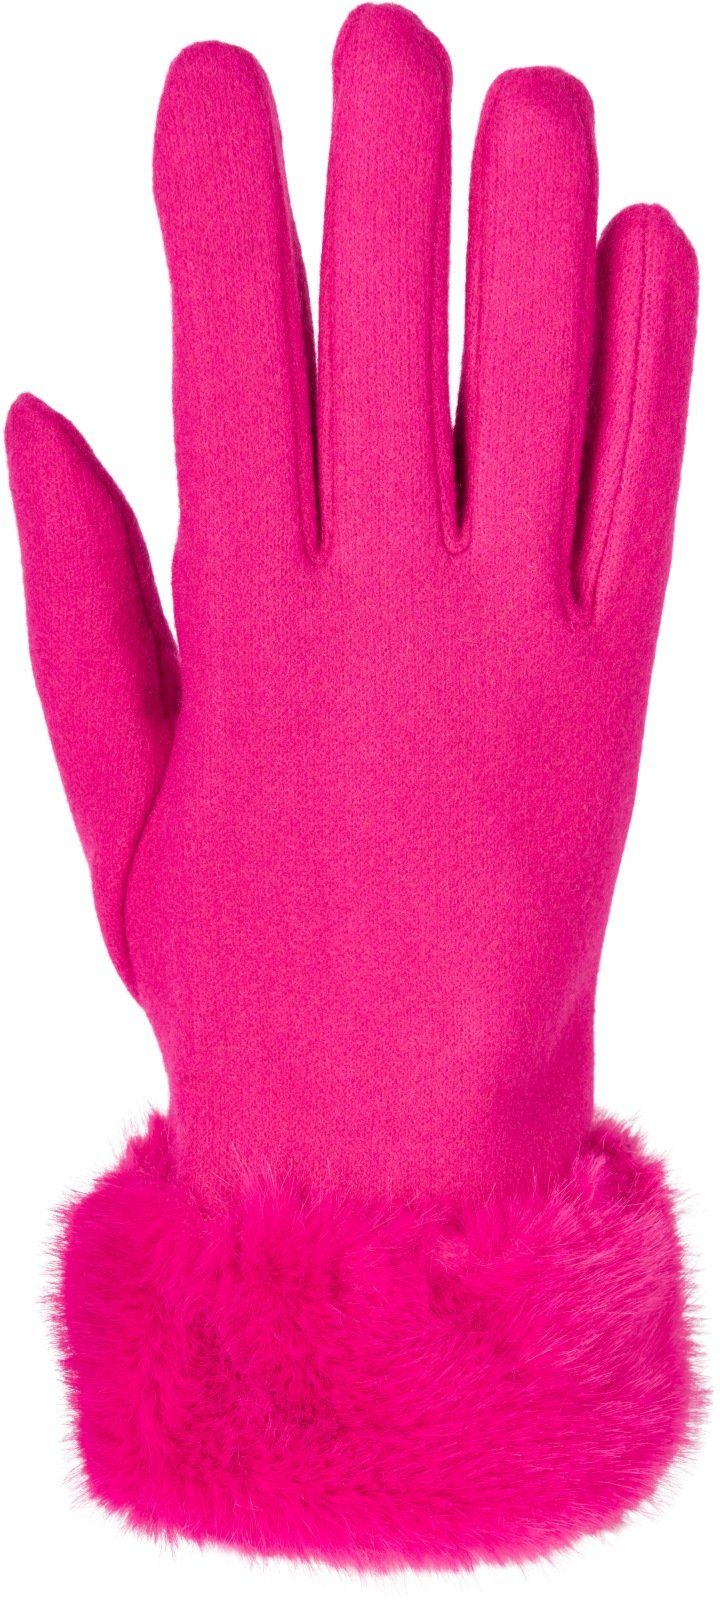 Unifarbene Pink mit Touchscreen Fleecehandschuhe Handschuhe styleBREAKER Kunstfell